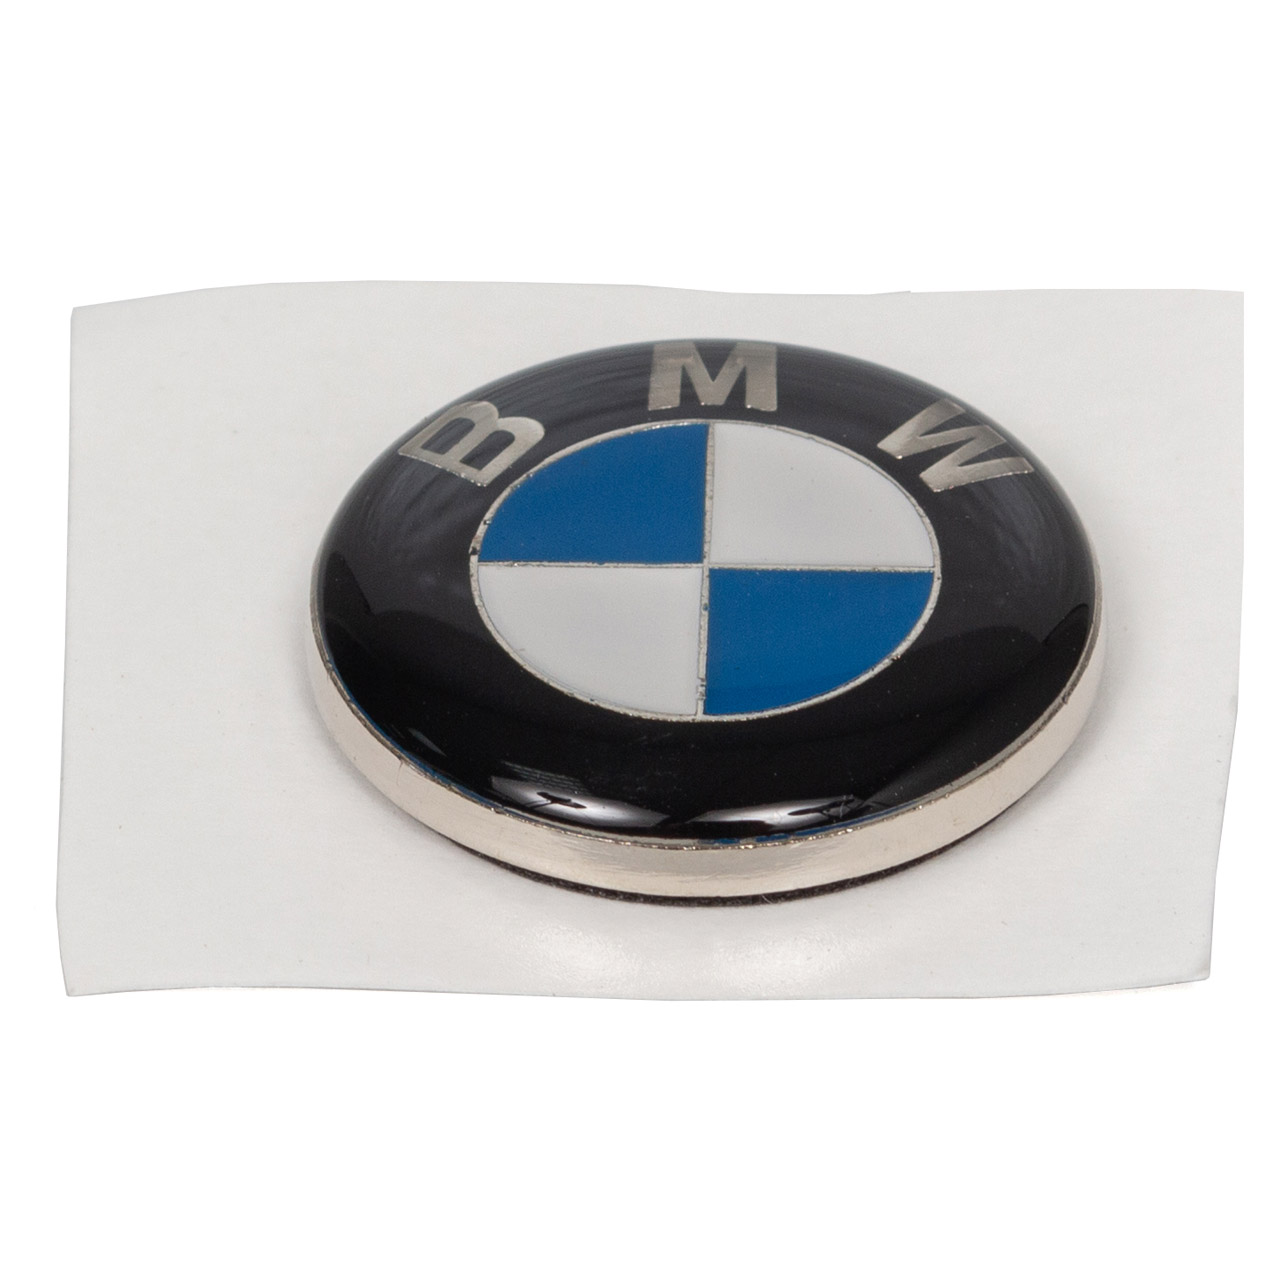 ORIGINAL BMW Motorrad Emblem Schriftzug Logo 27mm selbstklebend 51142328447